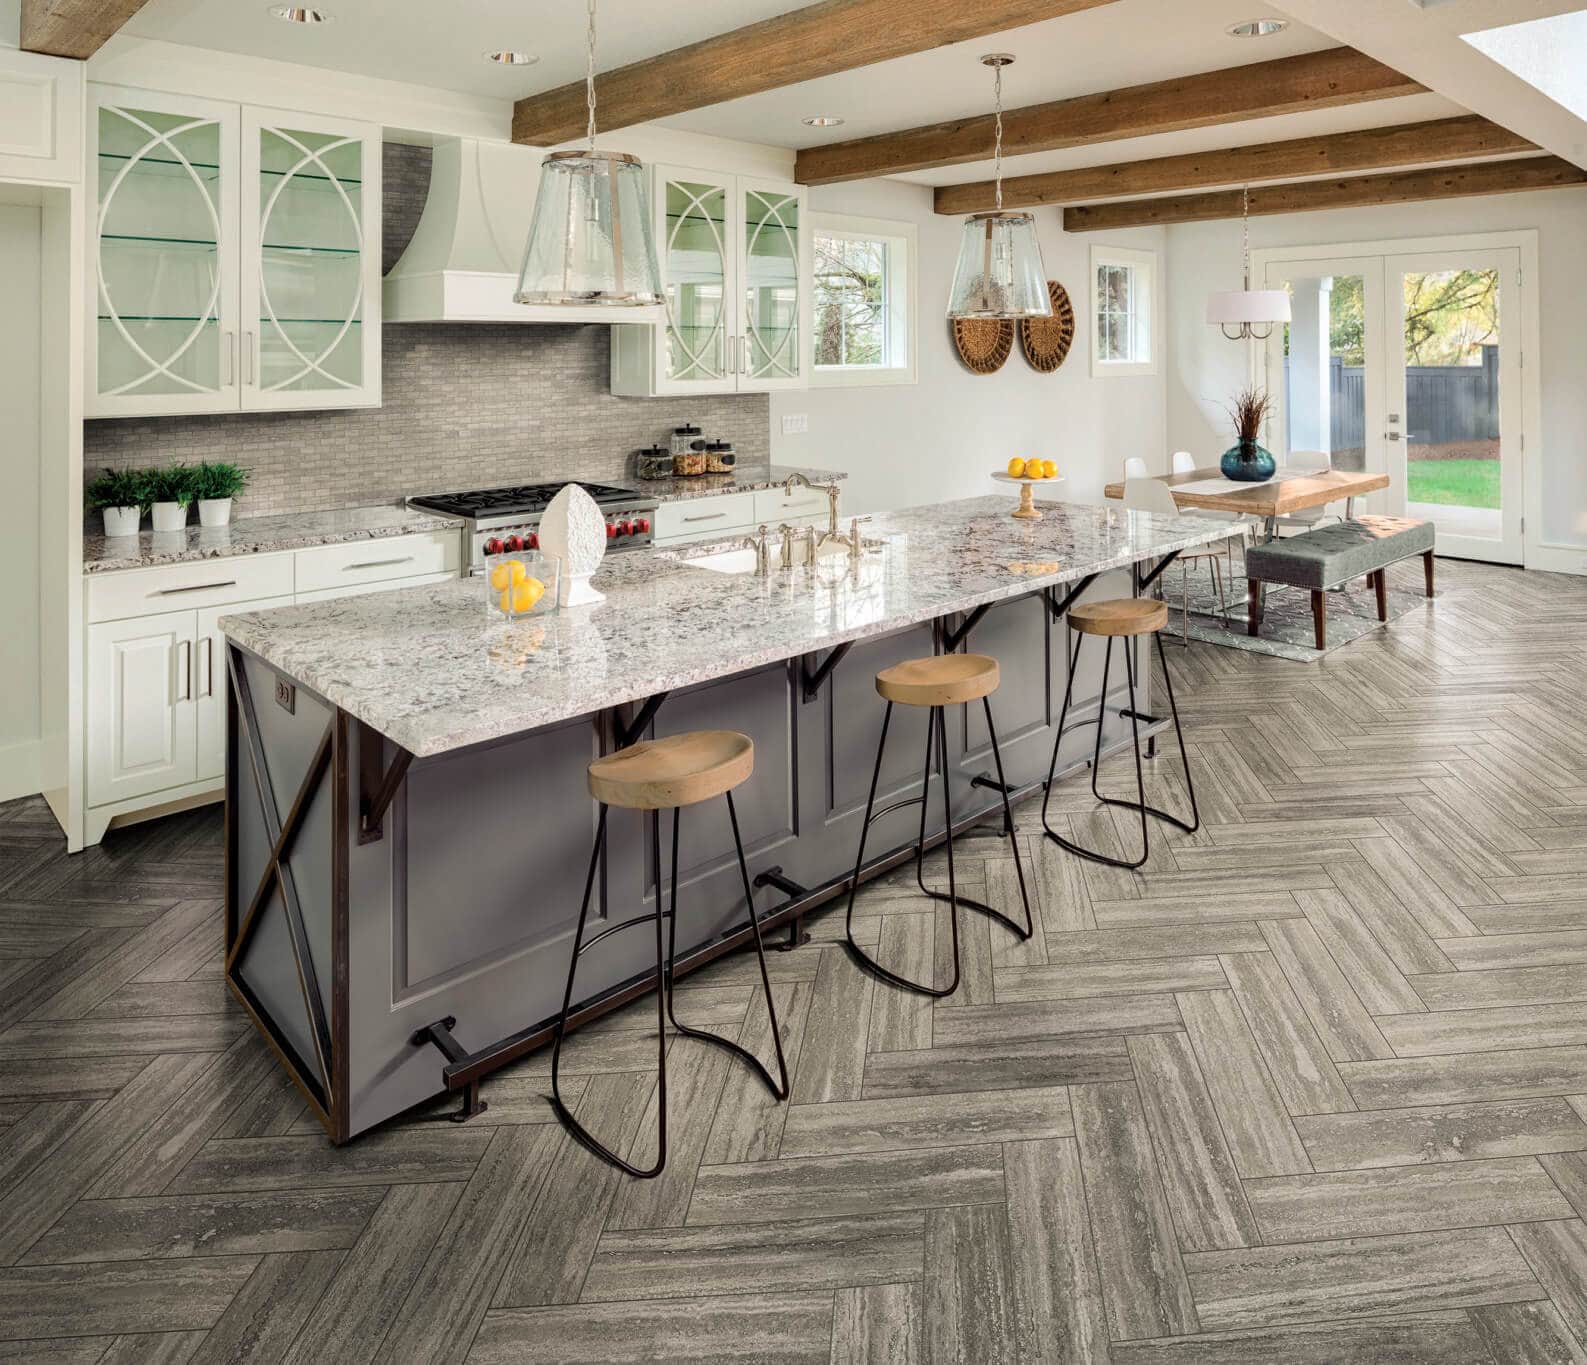 Wood-look mosaic tile kitchen backsplash in a running bond pattern